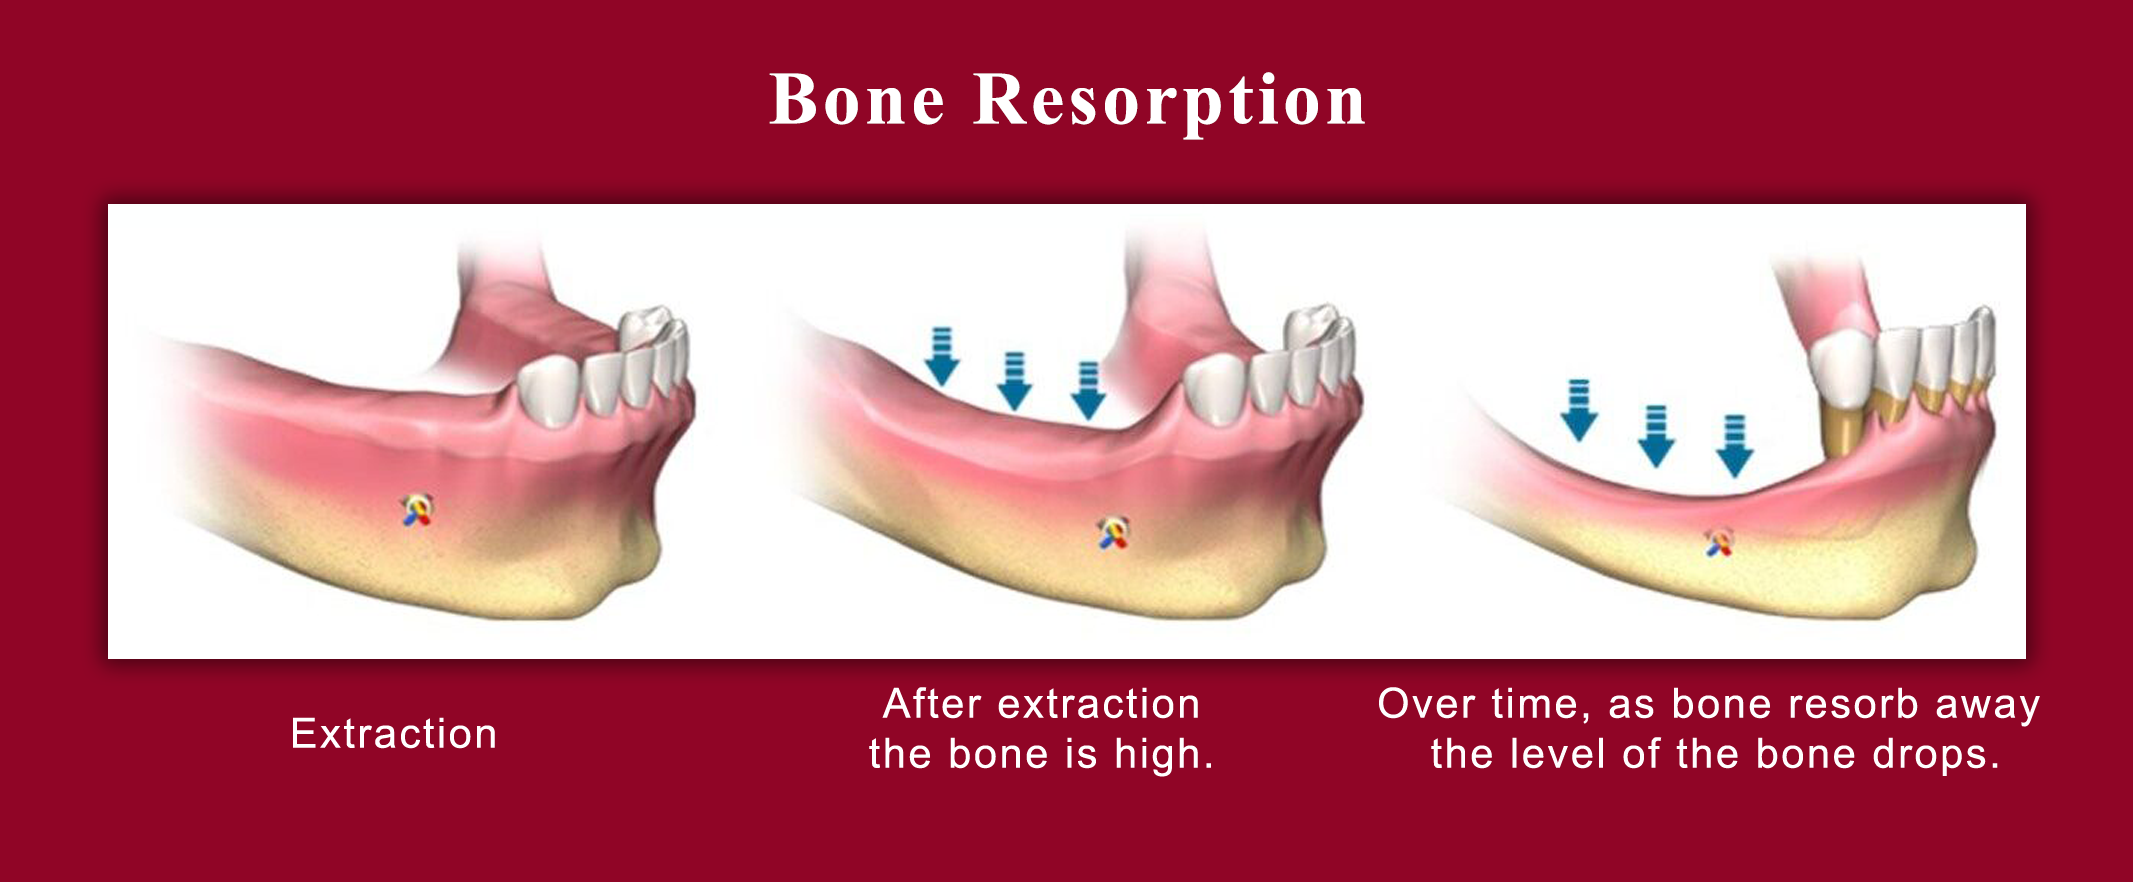 Bone Resorption stages